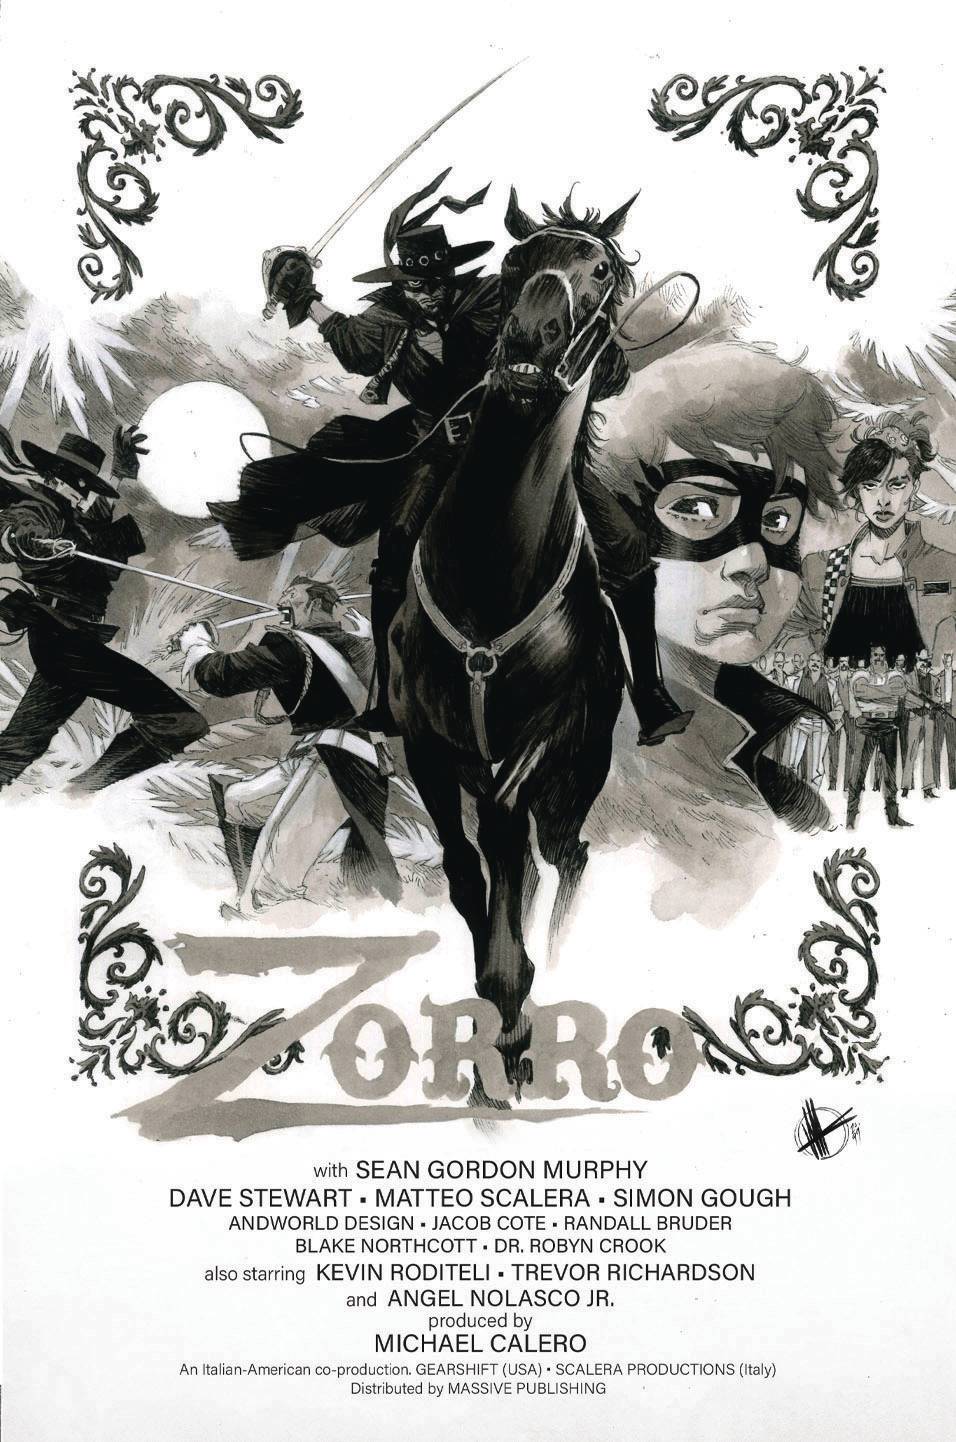 ZORRO MAN OF THE DEAD #1 (OF 4) CVR F 1:10 INCV SCALERAIMAGE COVER